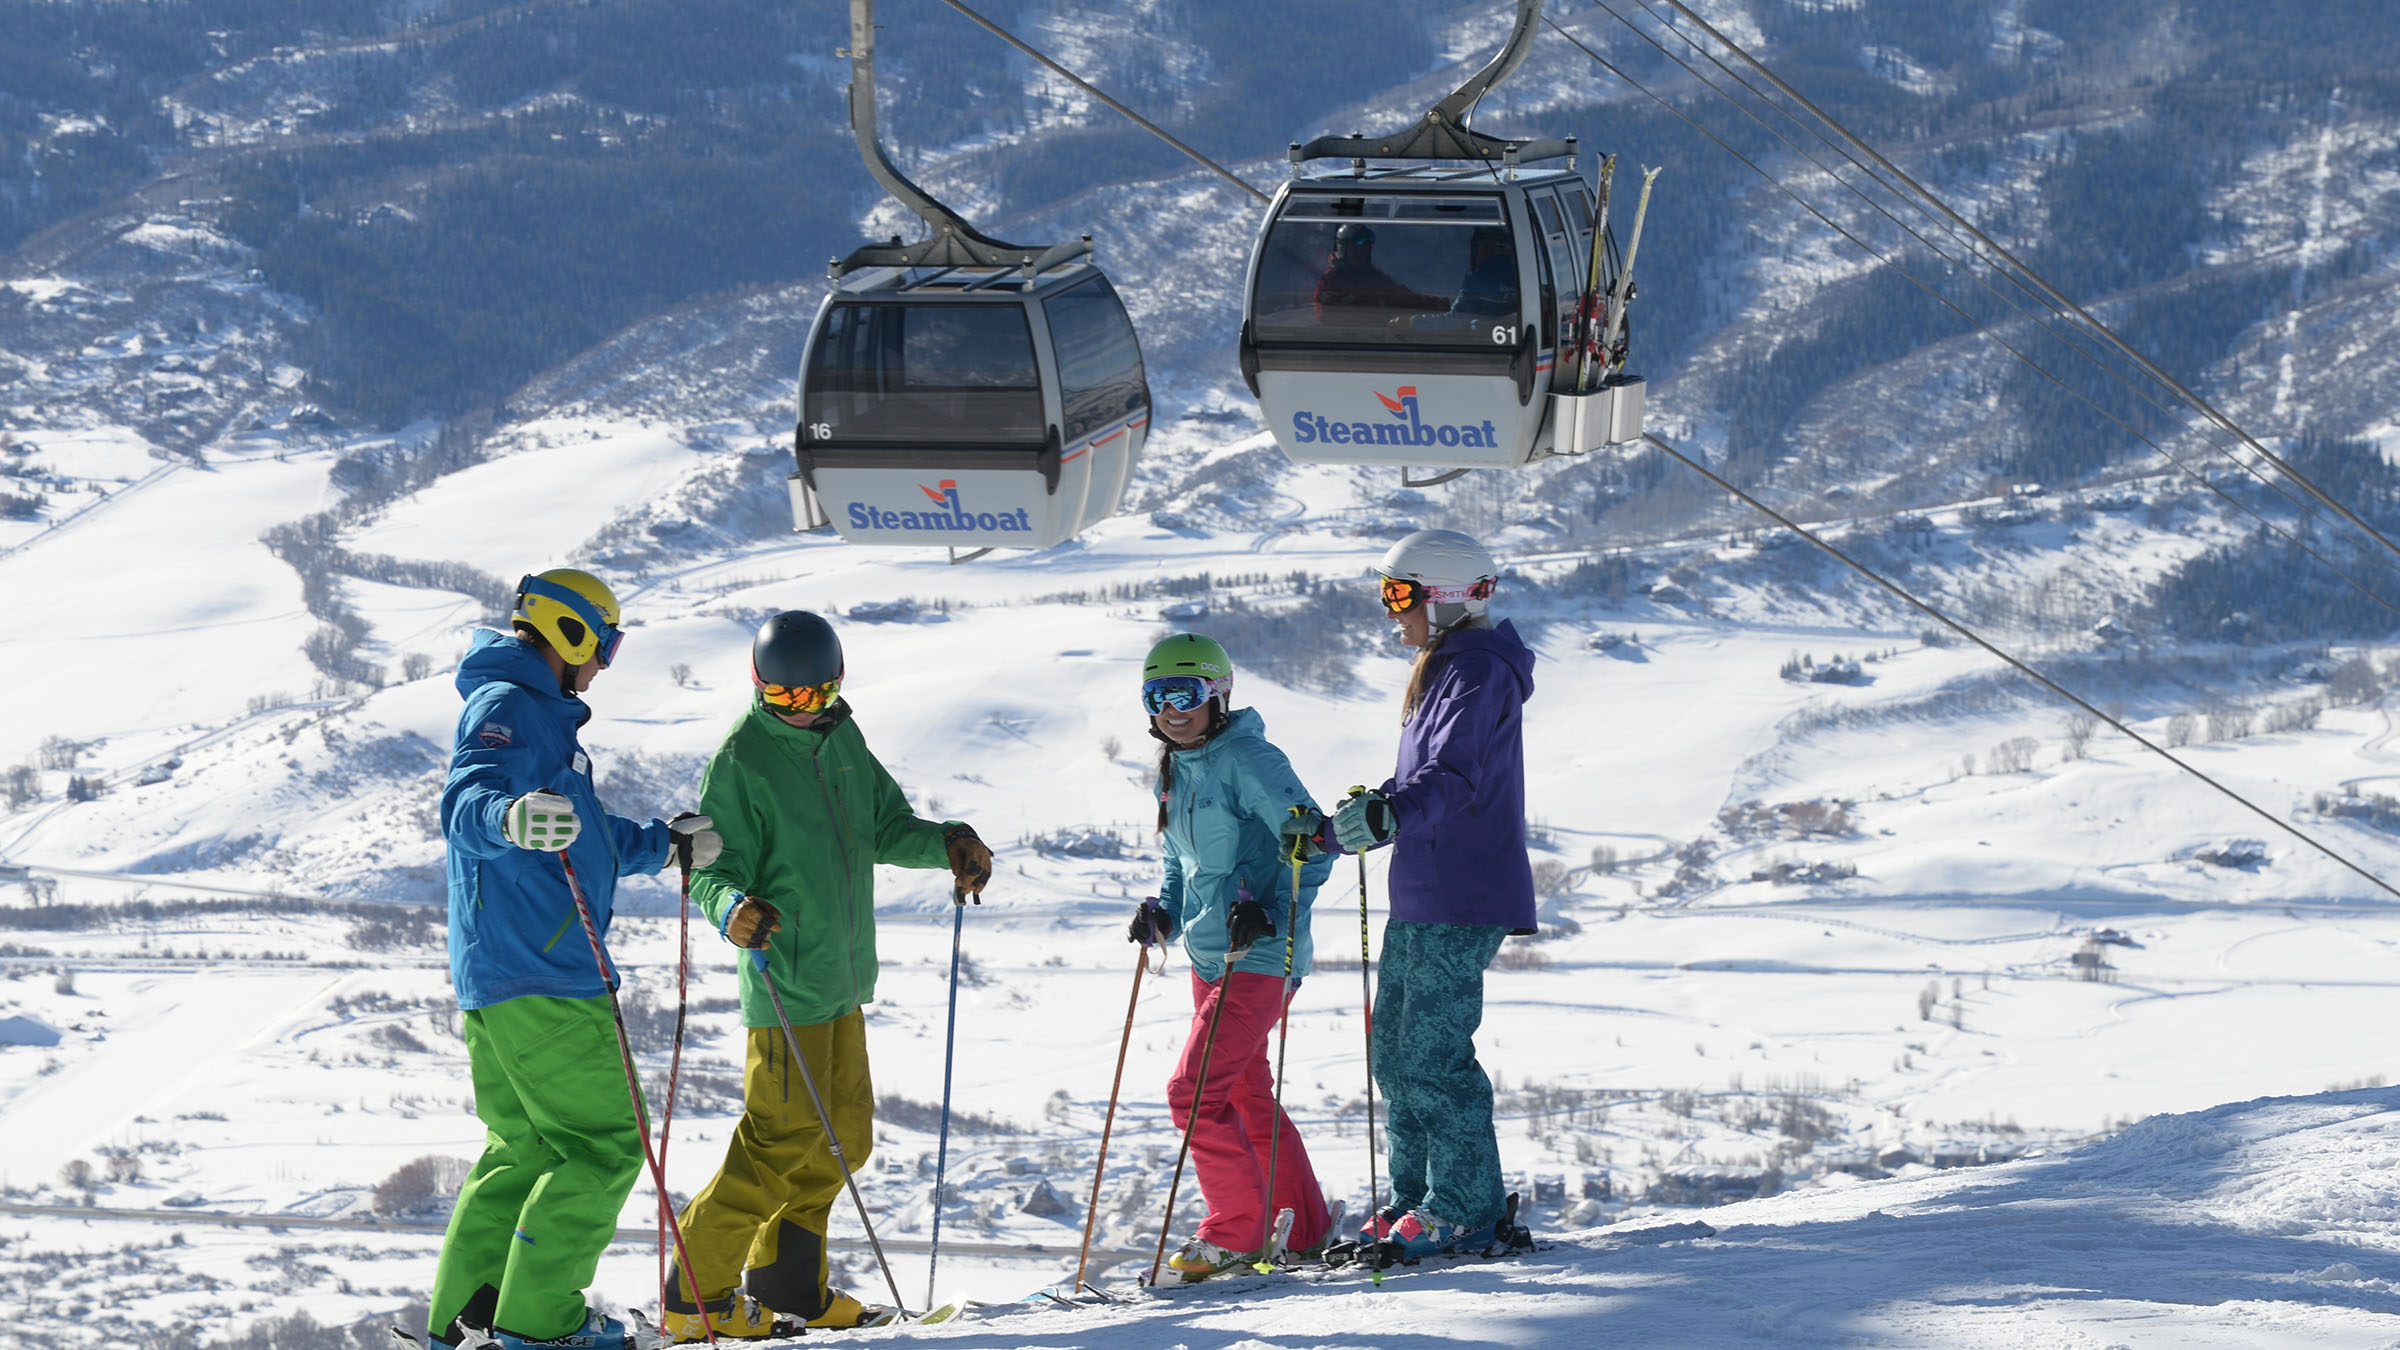 group ski trips to colorado